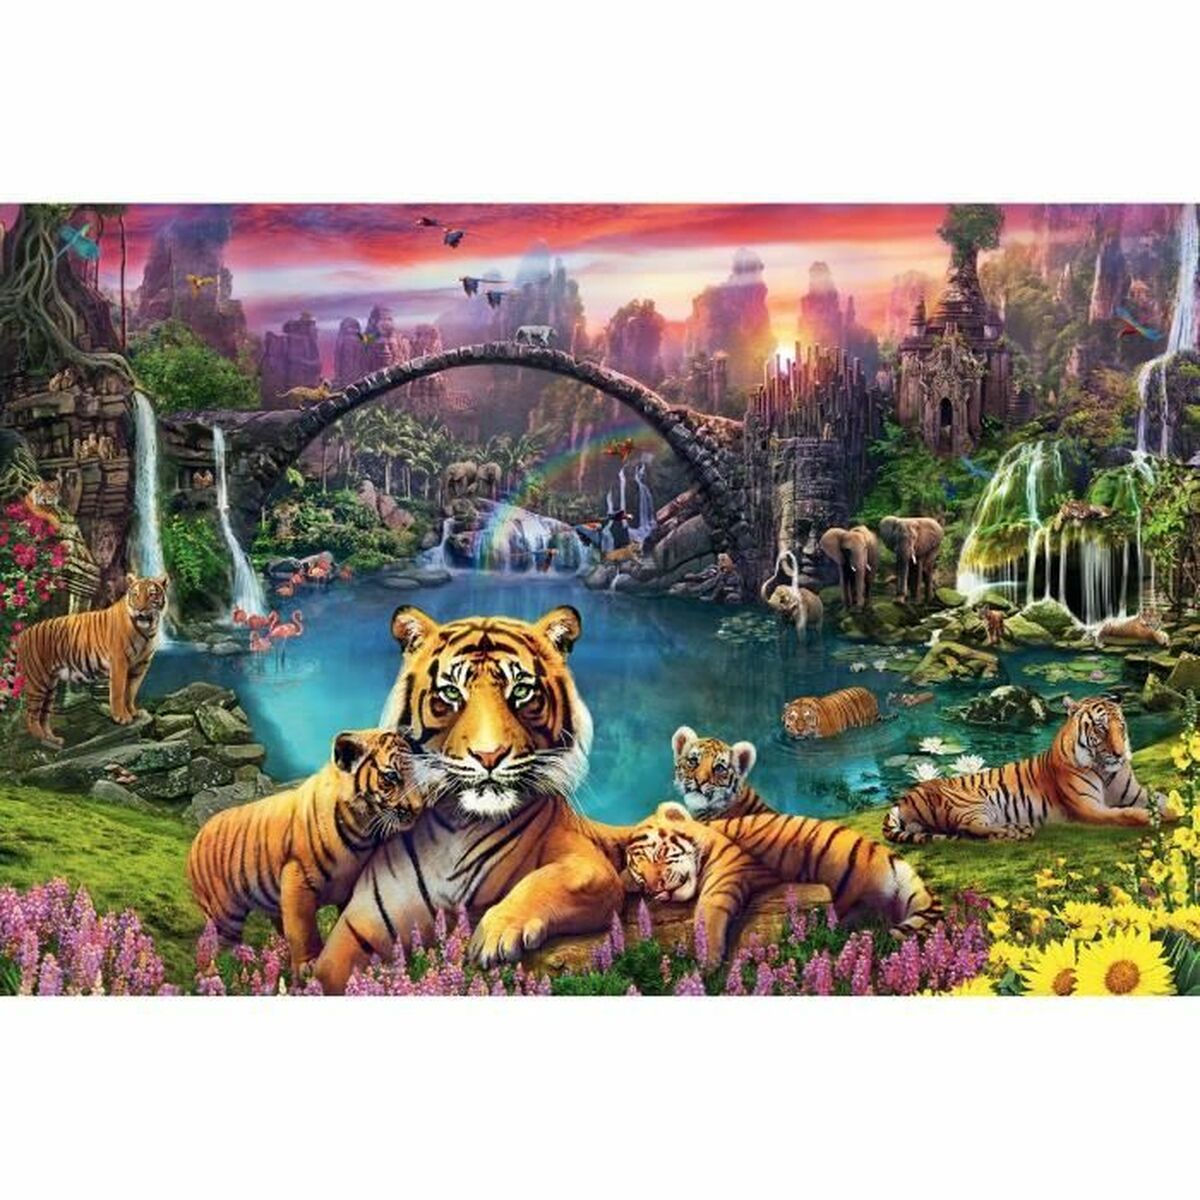 Puzzel Ravensburger Tigers in the lagoon 3000 Onderdelen